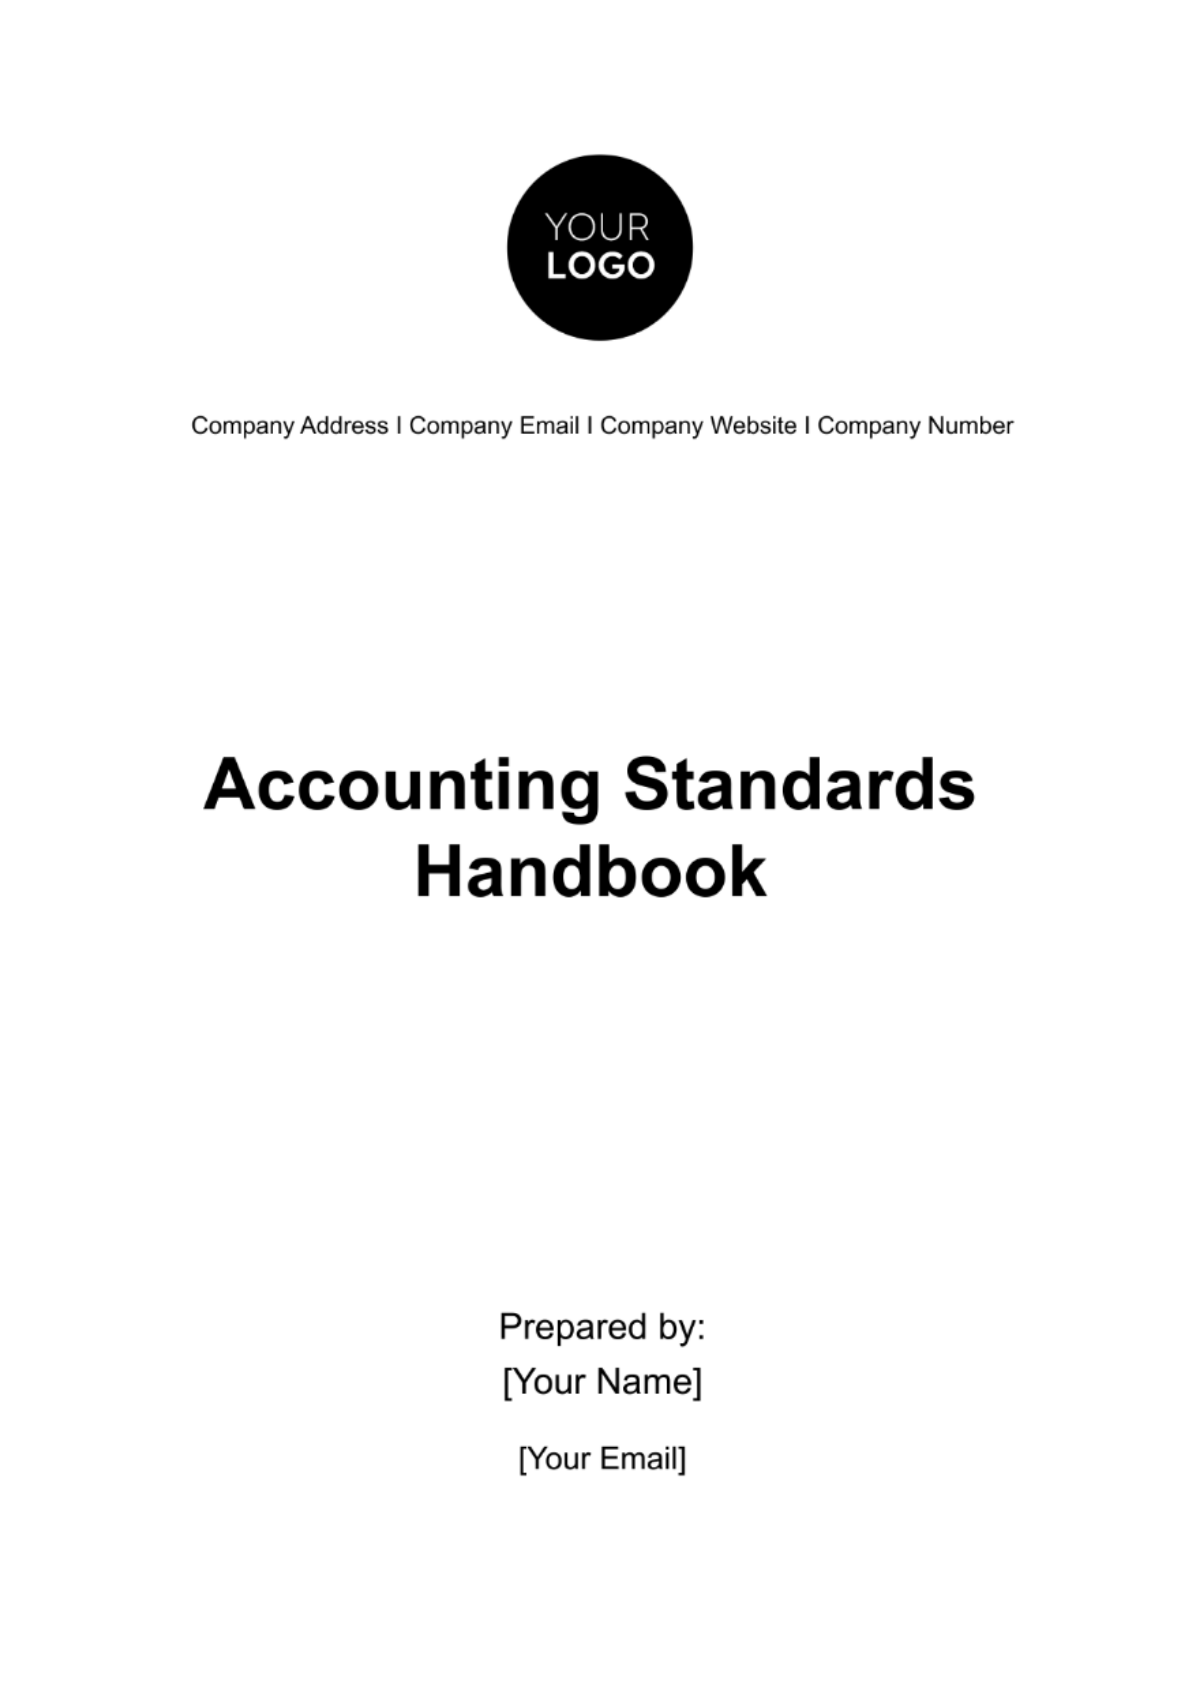 Accounting Standards Handbook Template